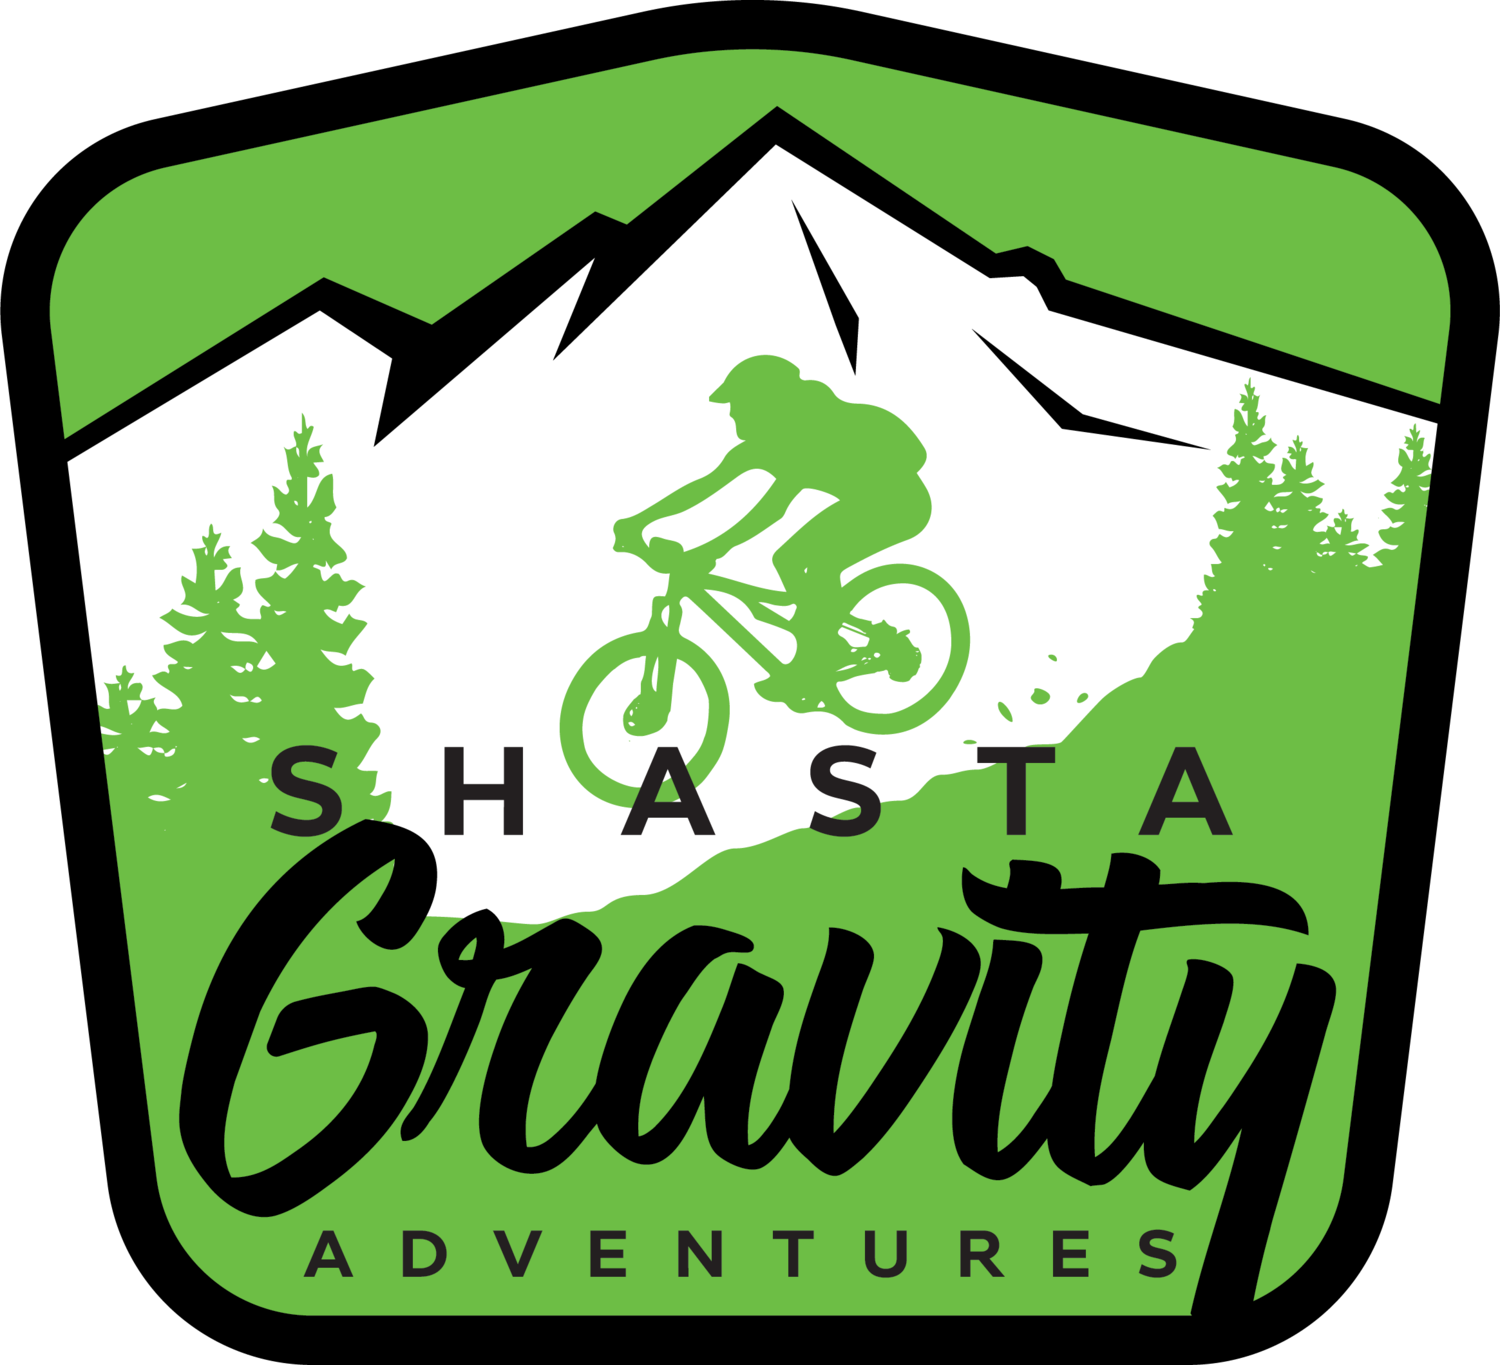 Shasta Gravity Adventures